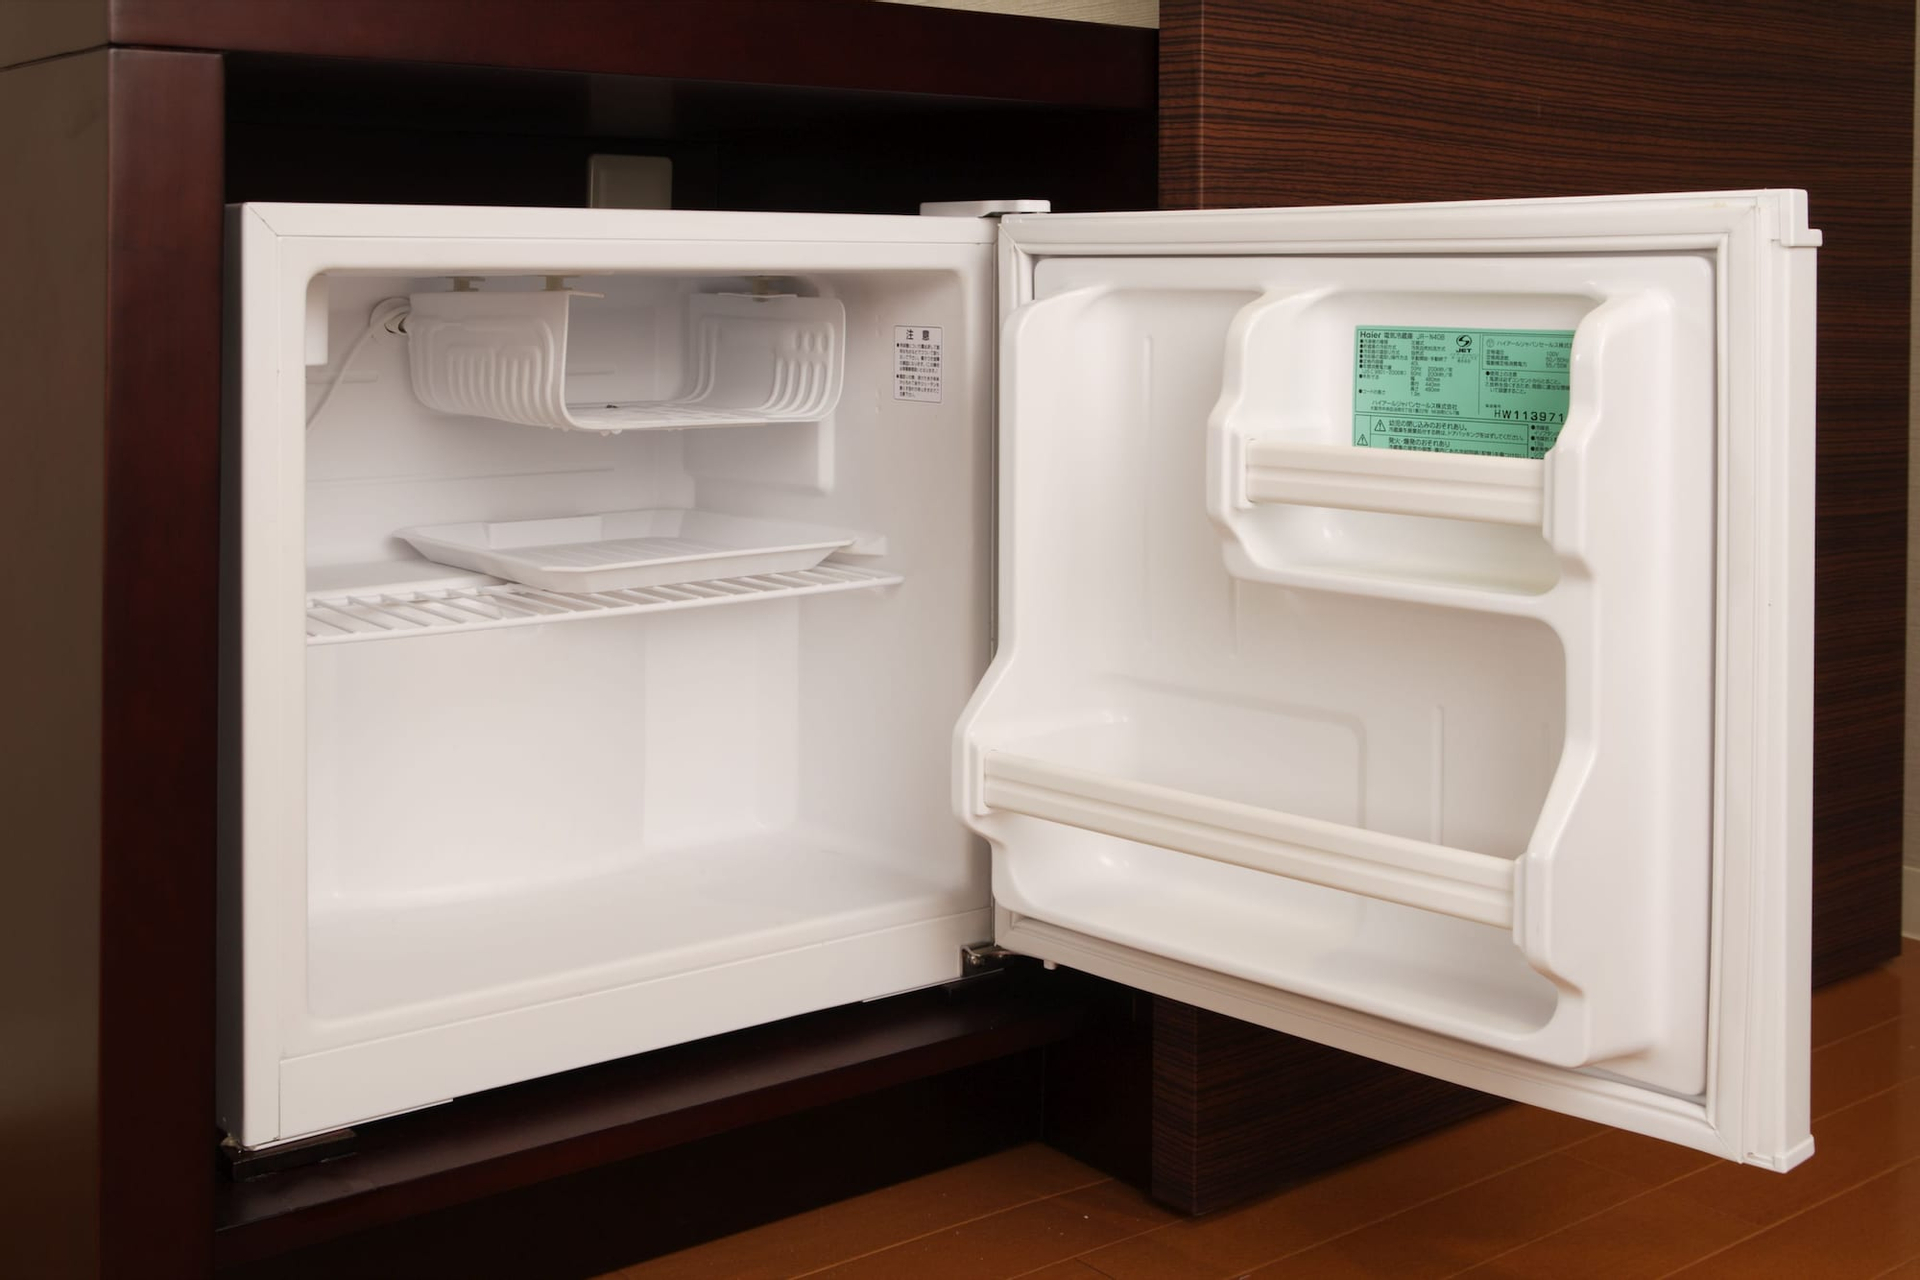 Mini-refrigerator 10